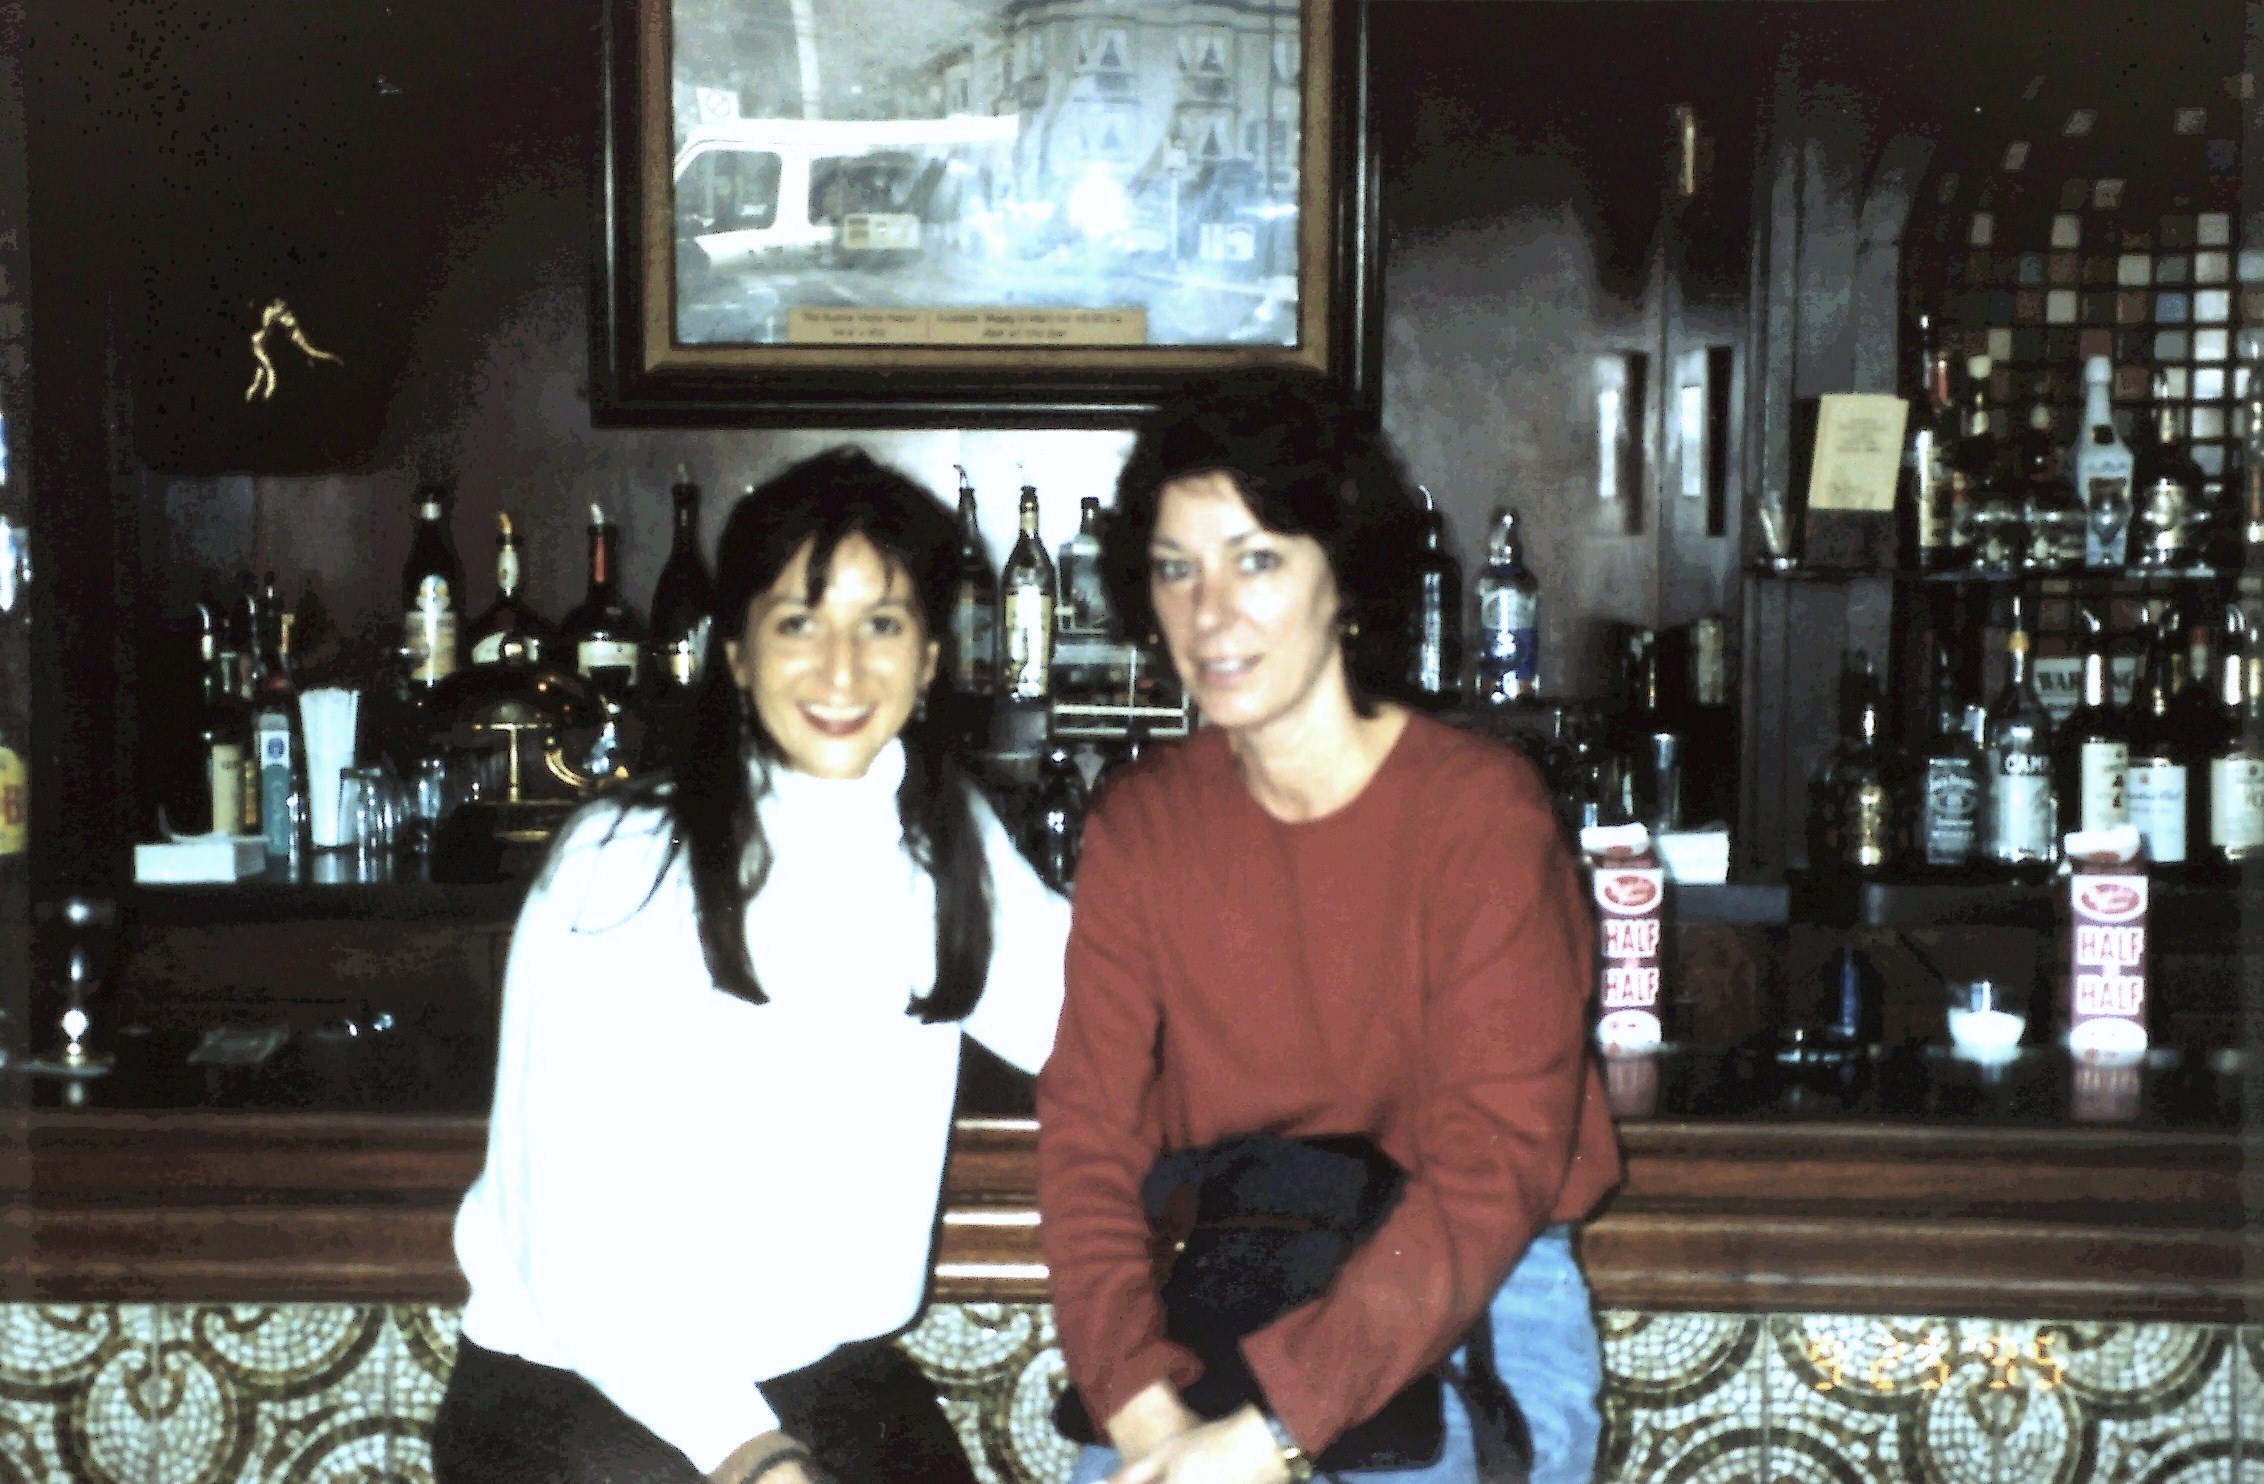 SF Irish restaurant Kathy and Nancy